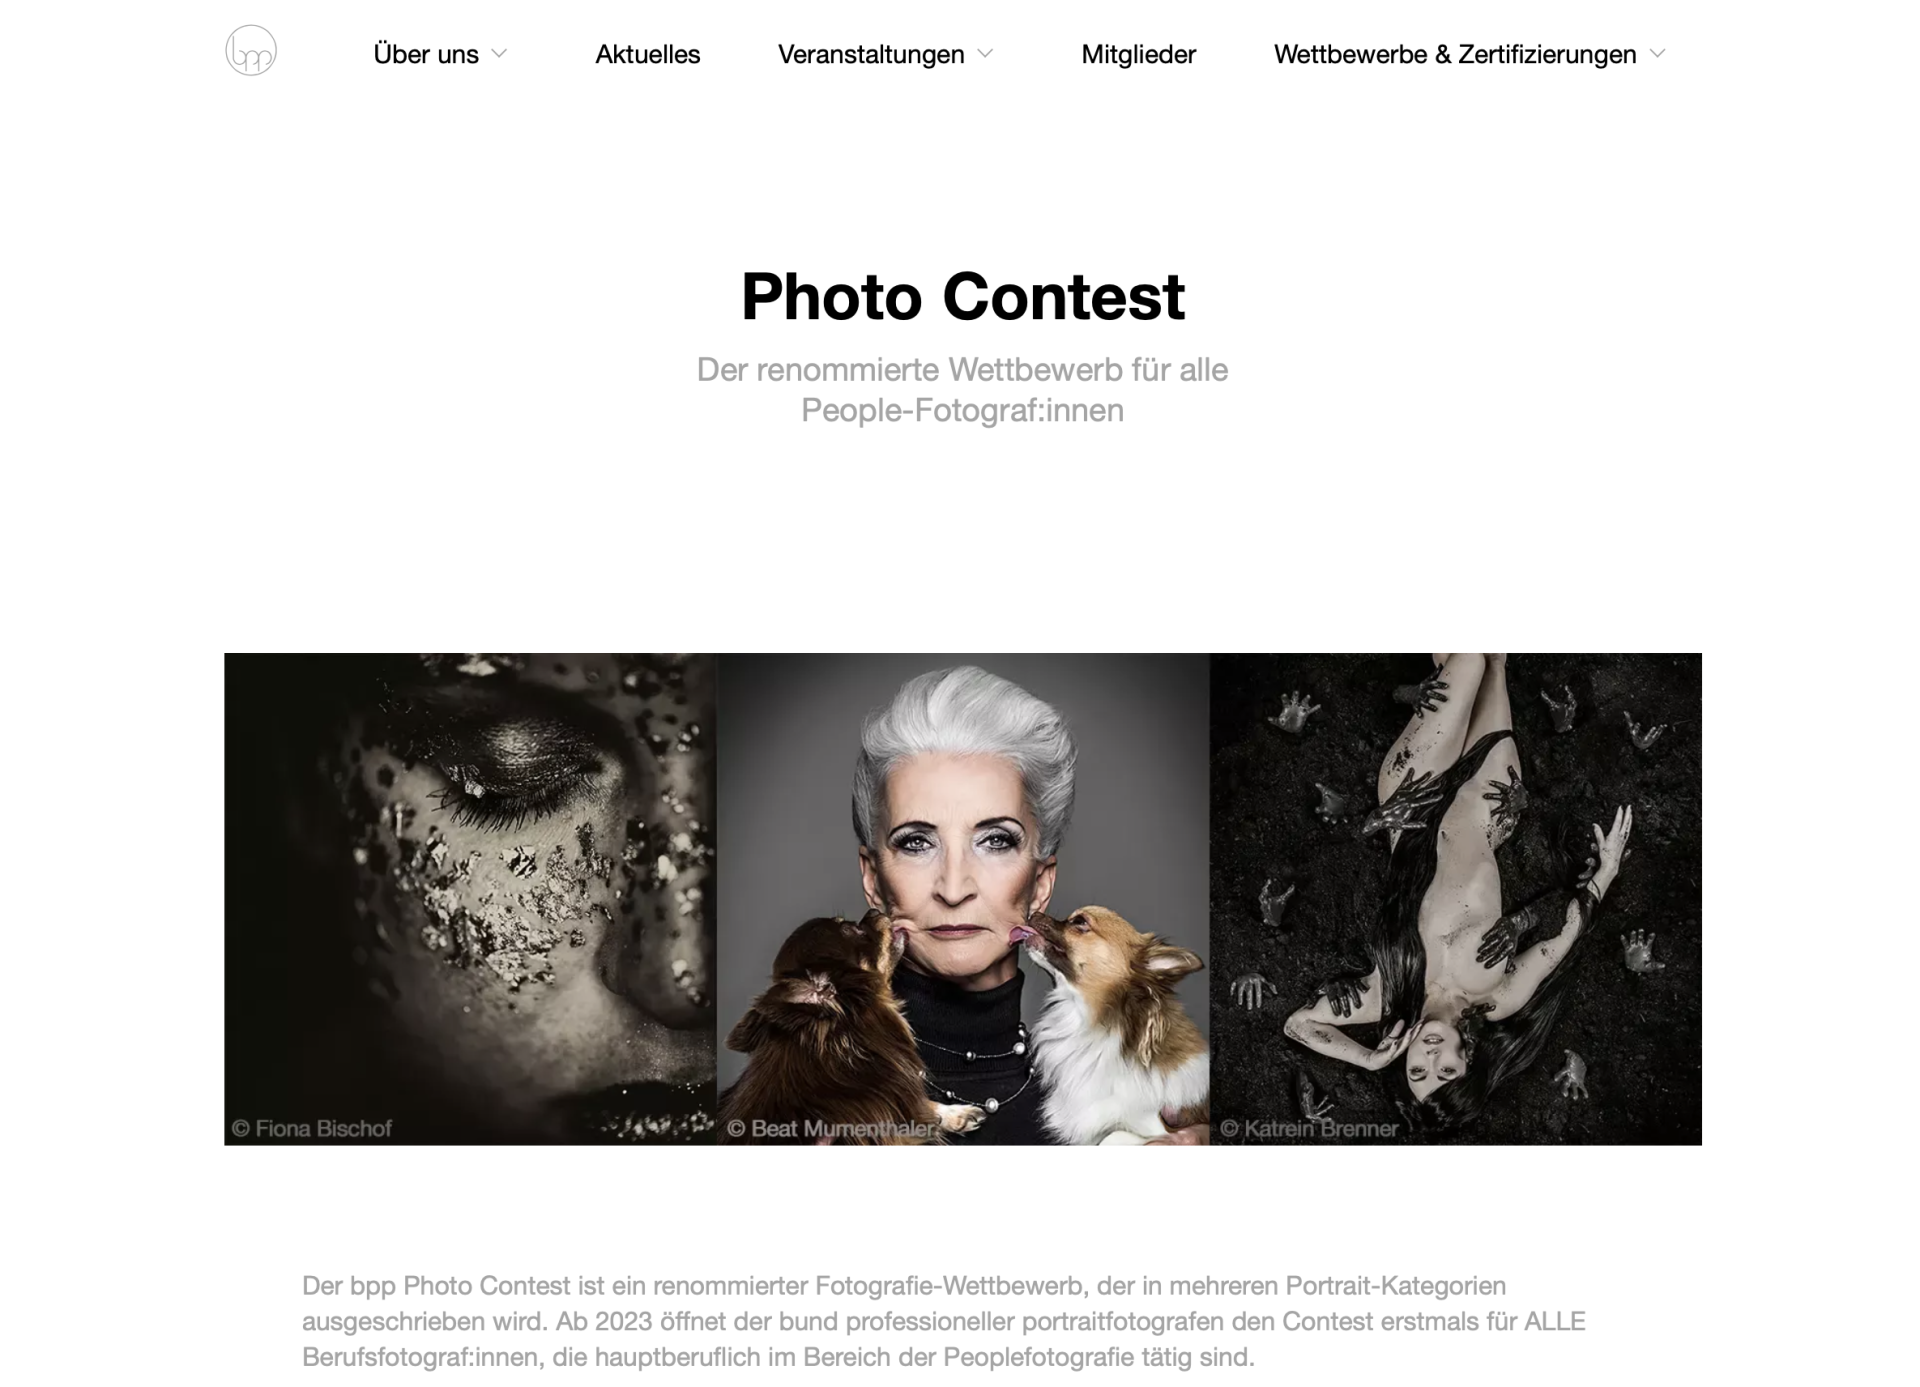 bpp Photo Contest